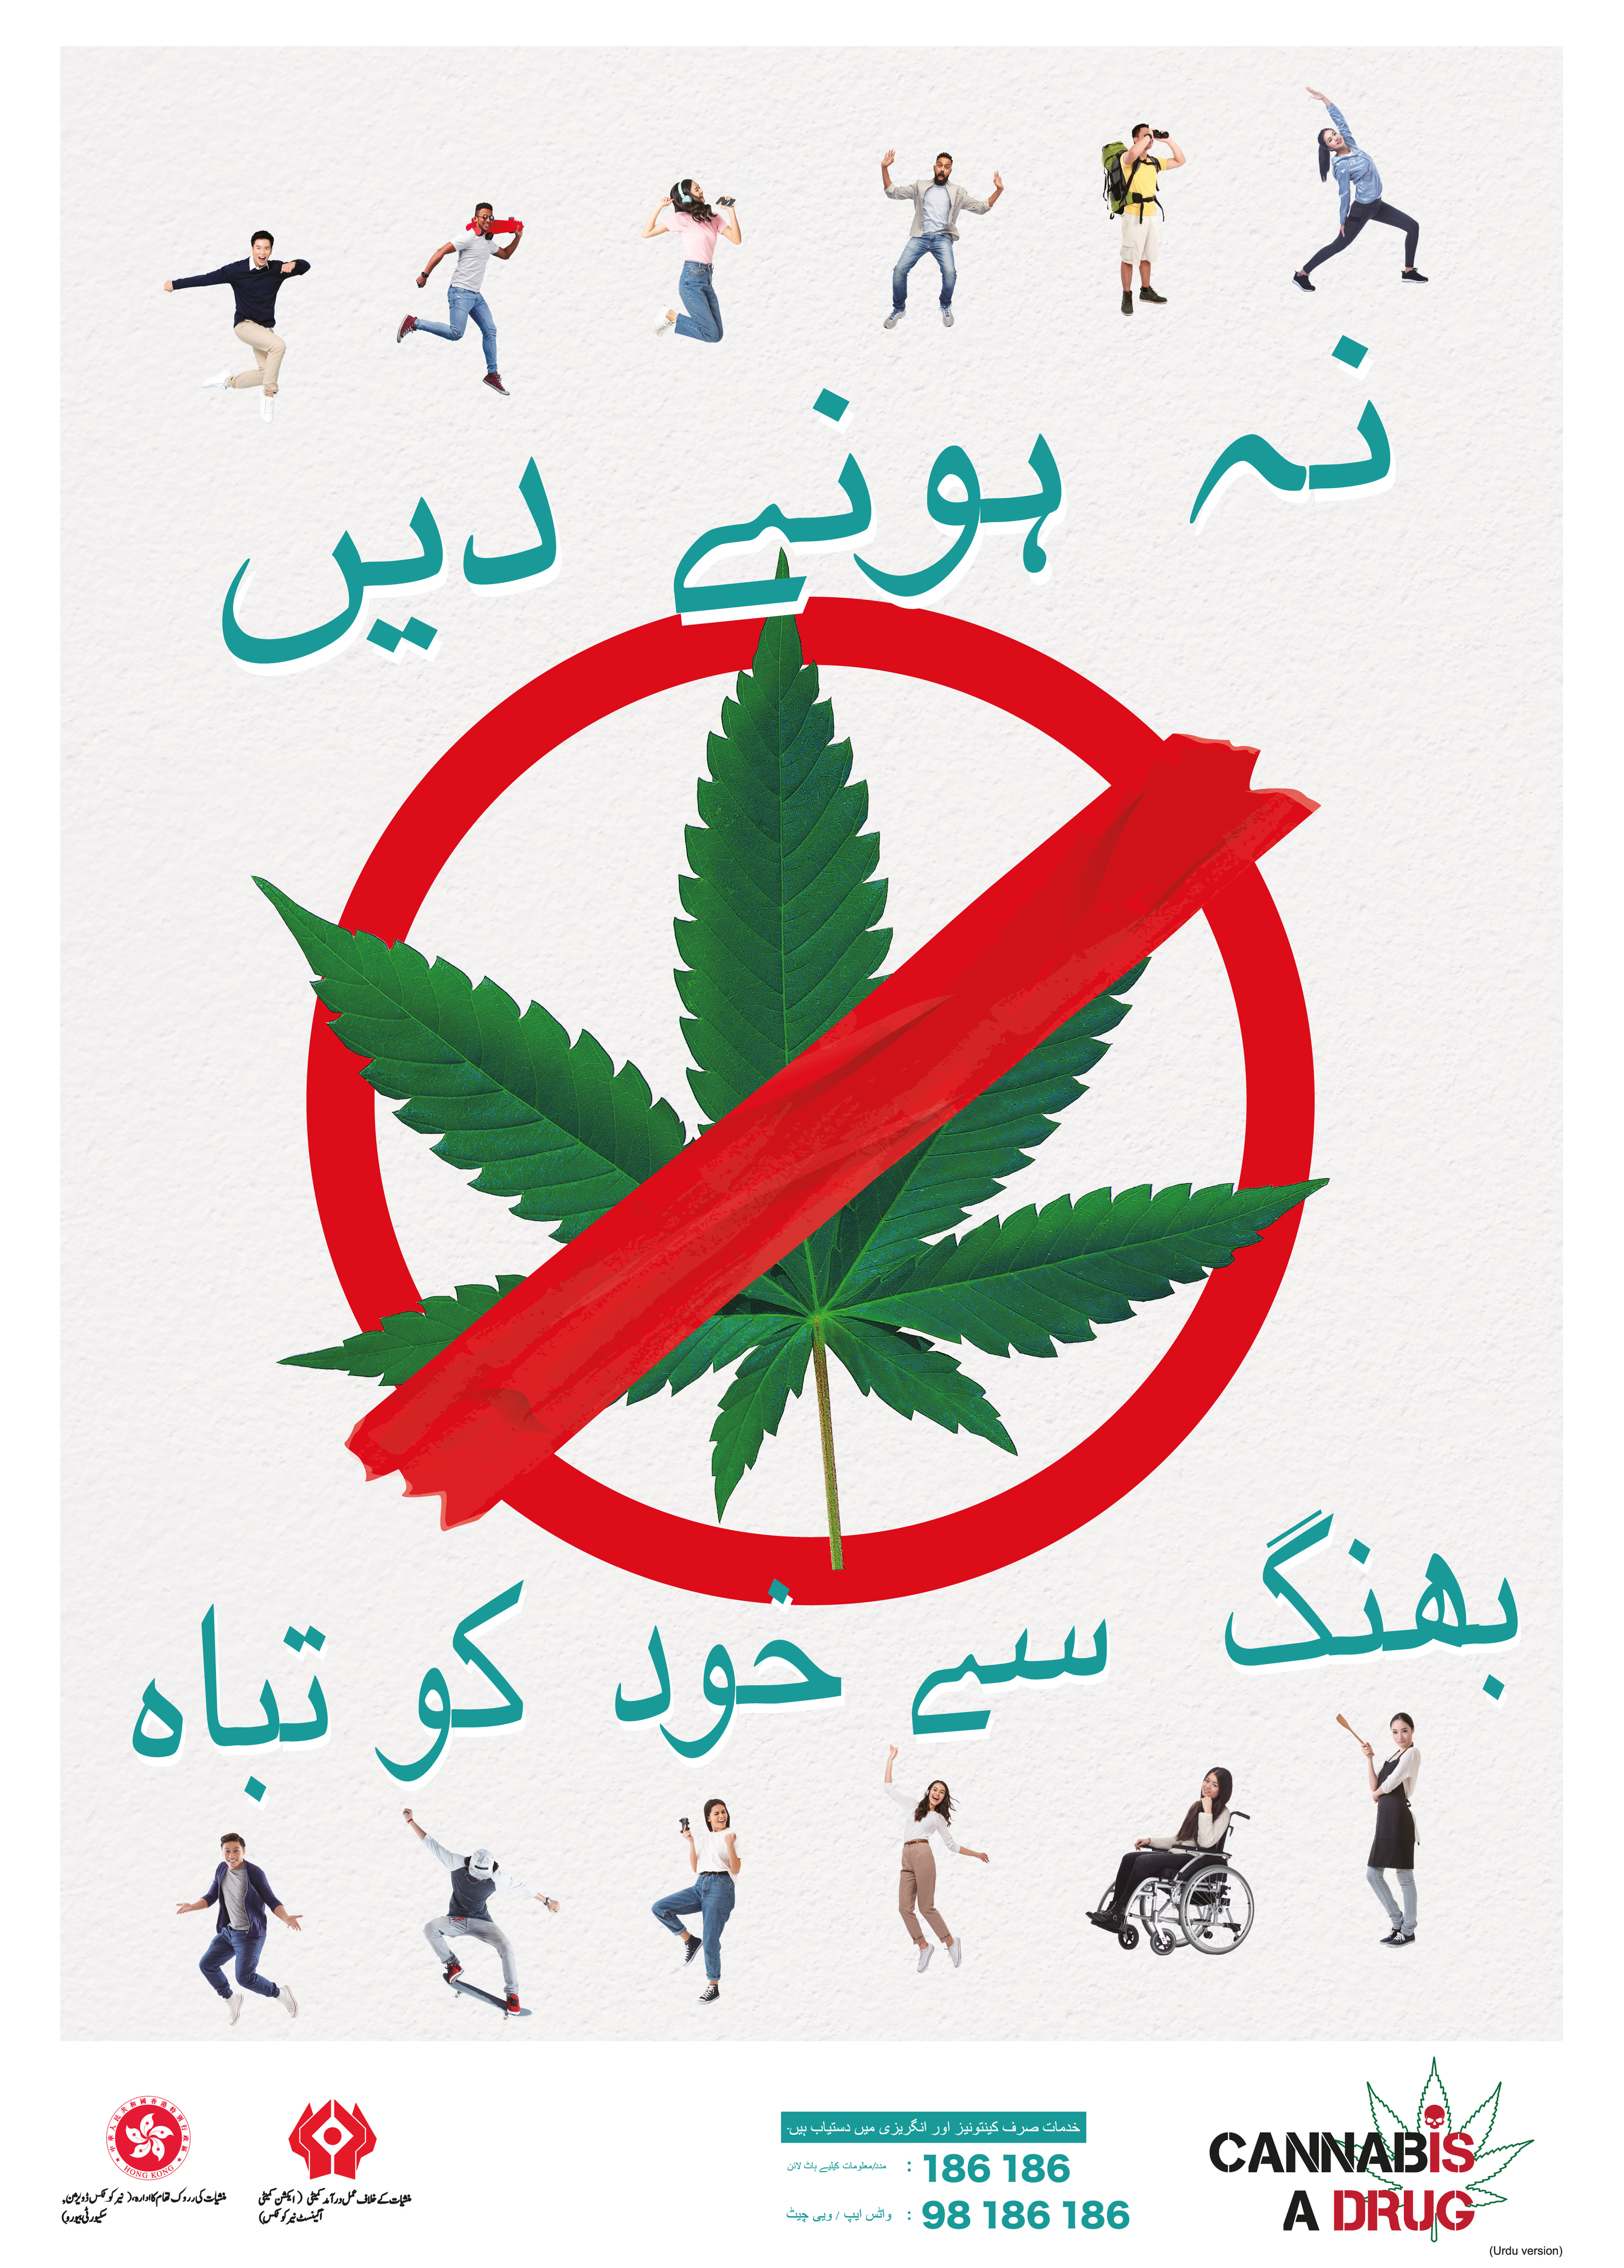 Anti-drug poster "Dont let cannabis ruin you" - Urdu version